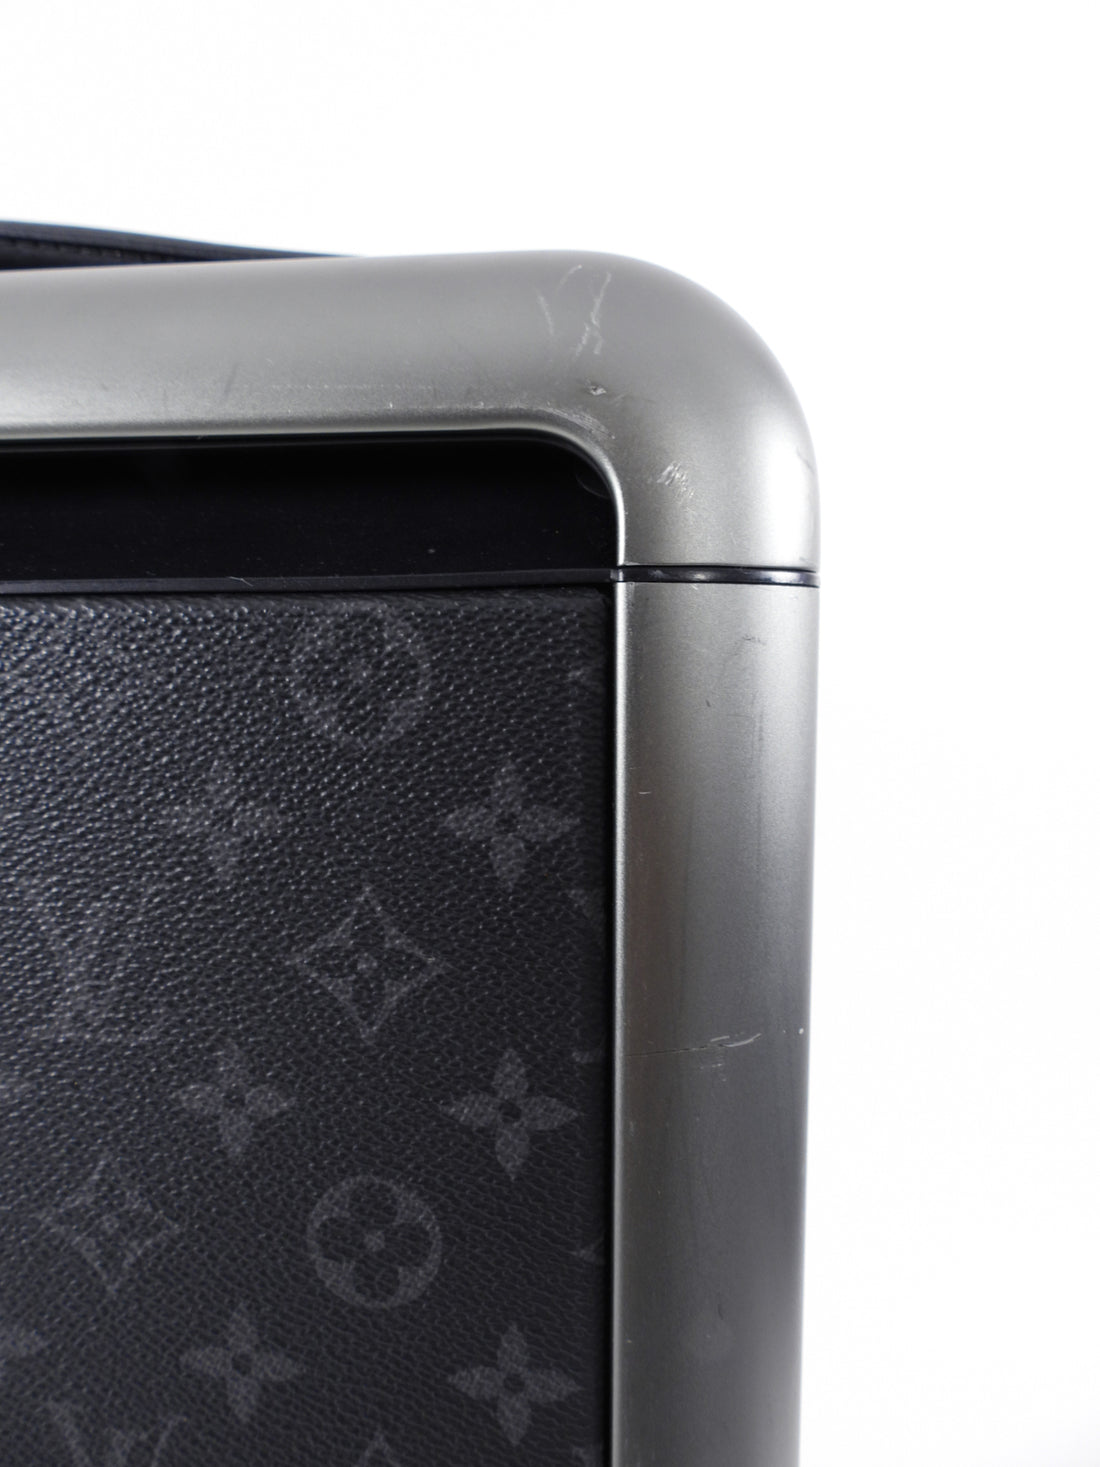 Shop authentic Louis Vuitton Monogram Eclipse Galaxy Rolling Horizon 55 at  revogue for just USD 6,000.00